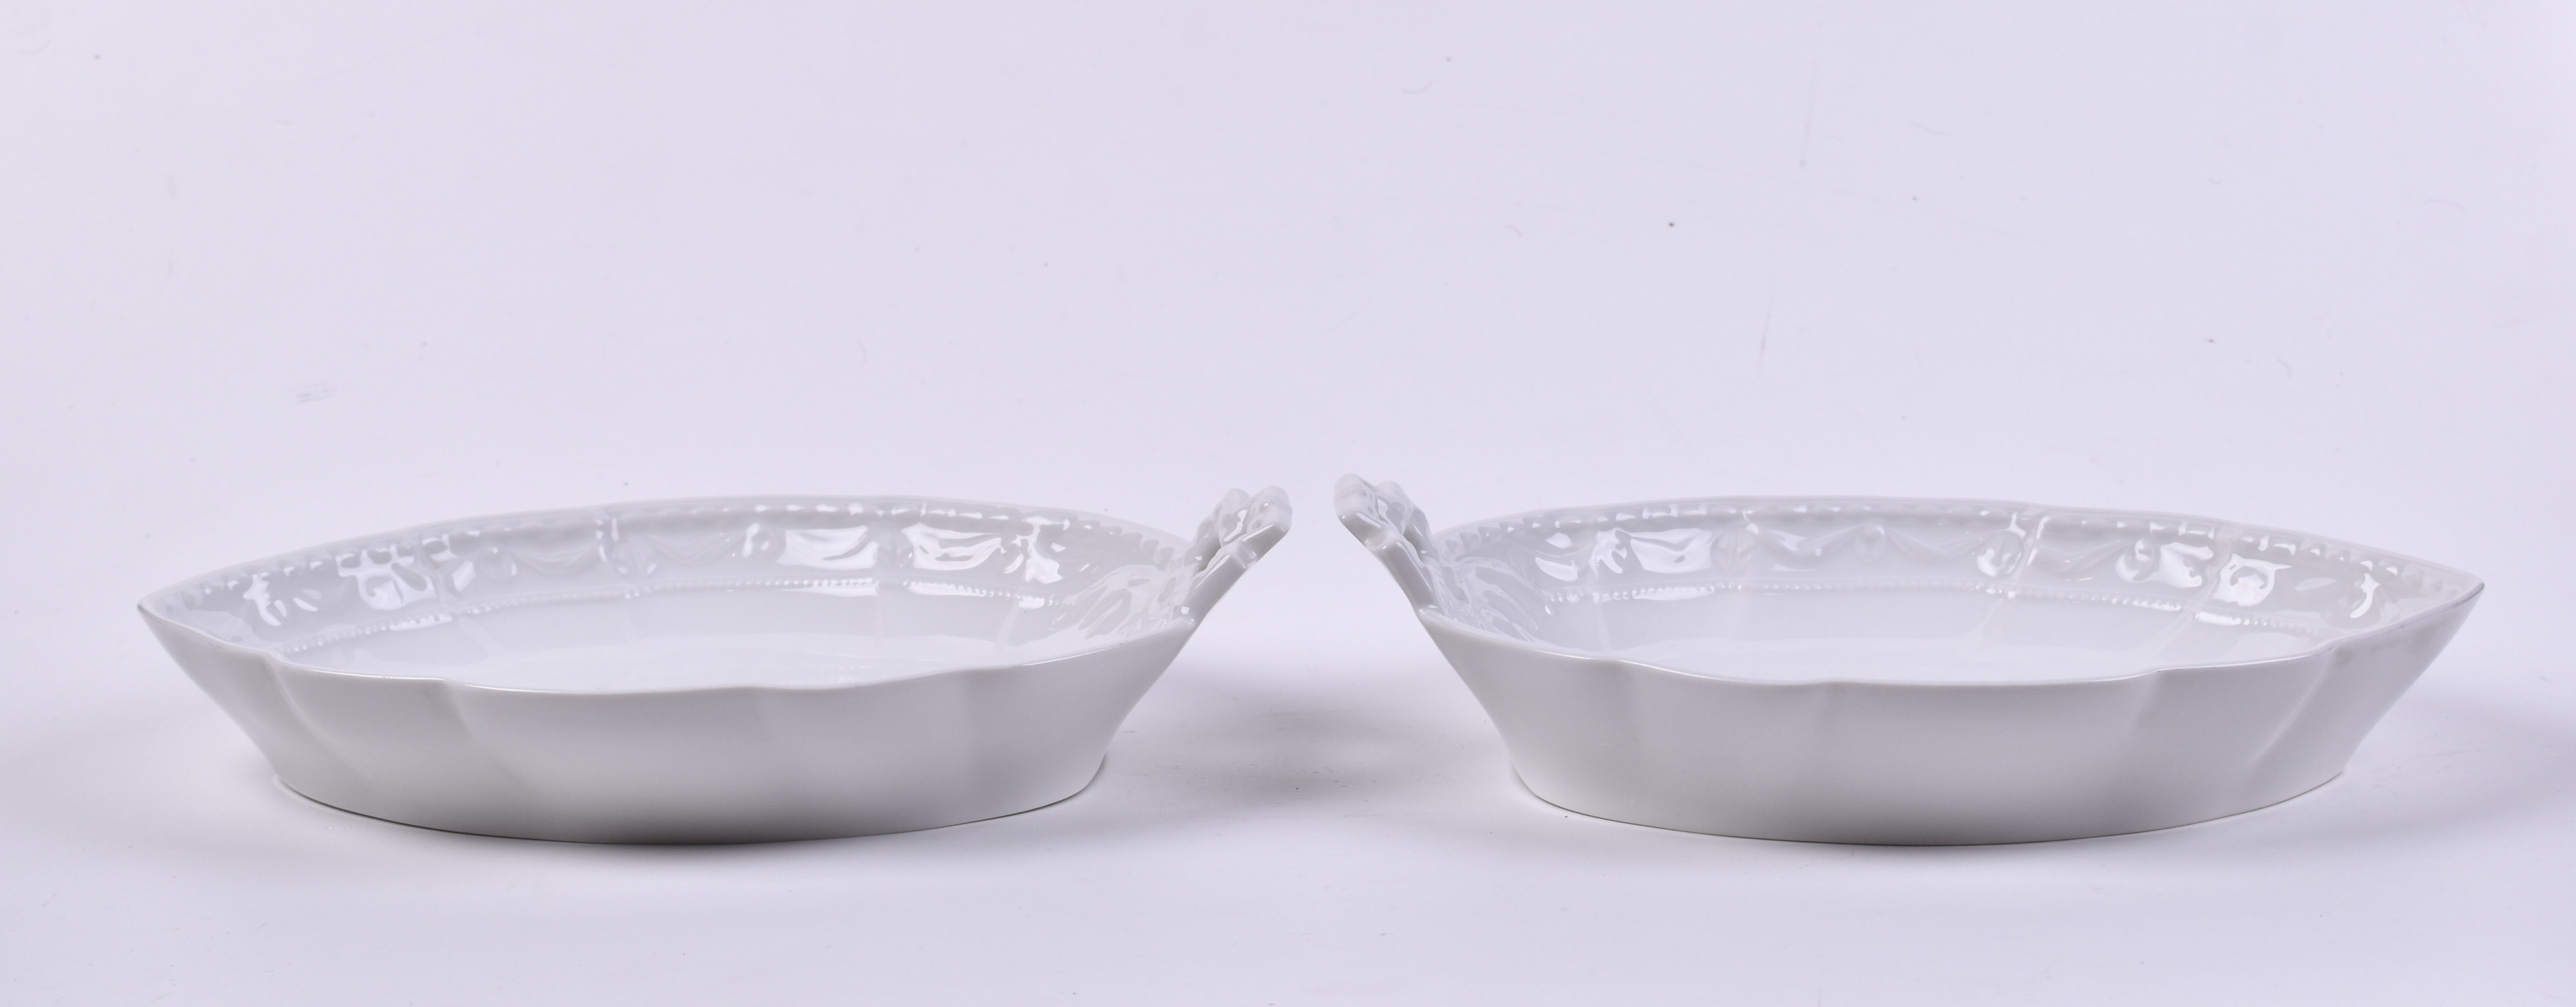  Pair of leaf bowls KPM Kurland - Image 2 of 3